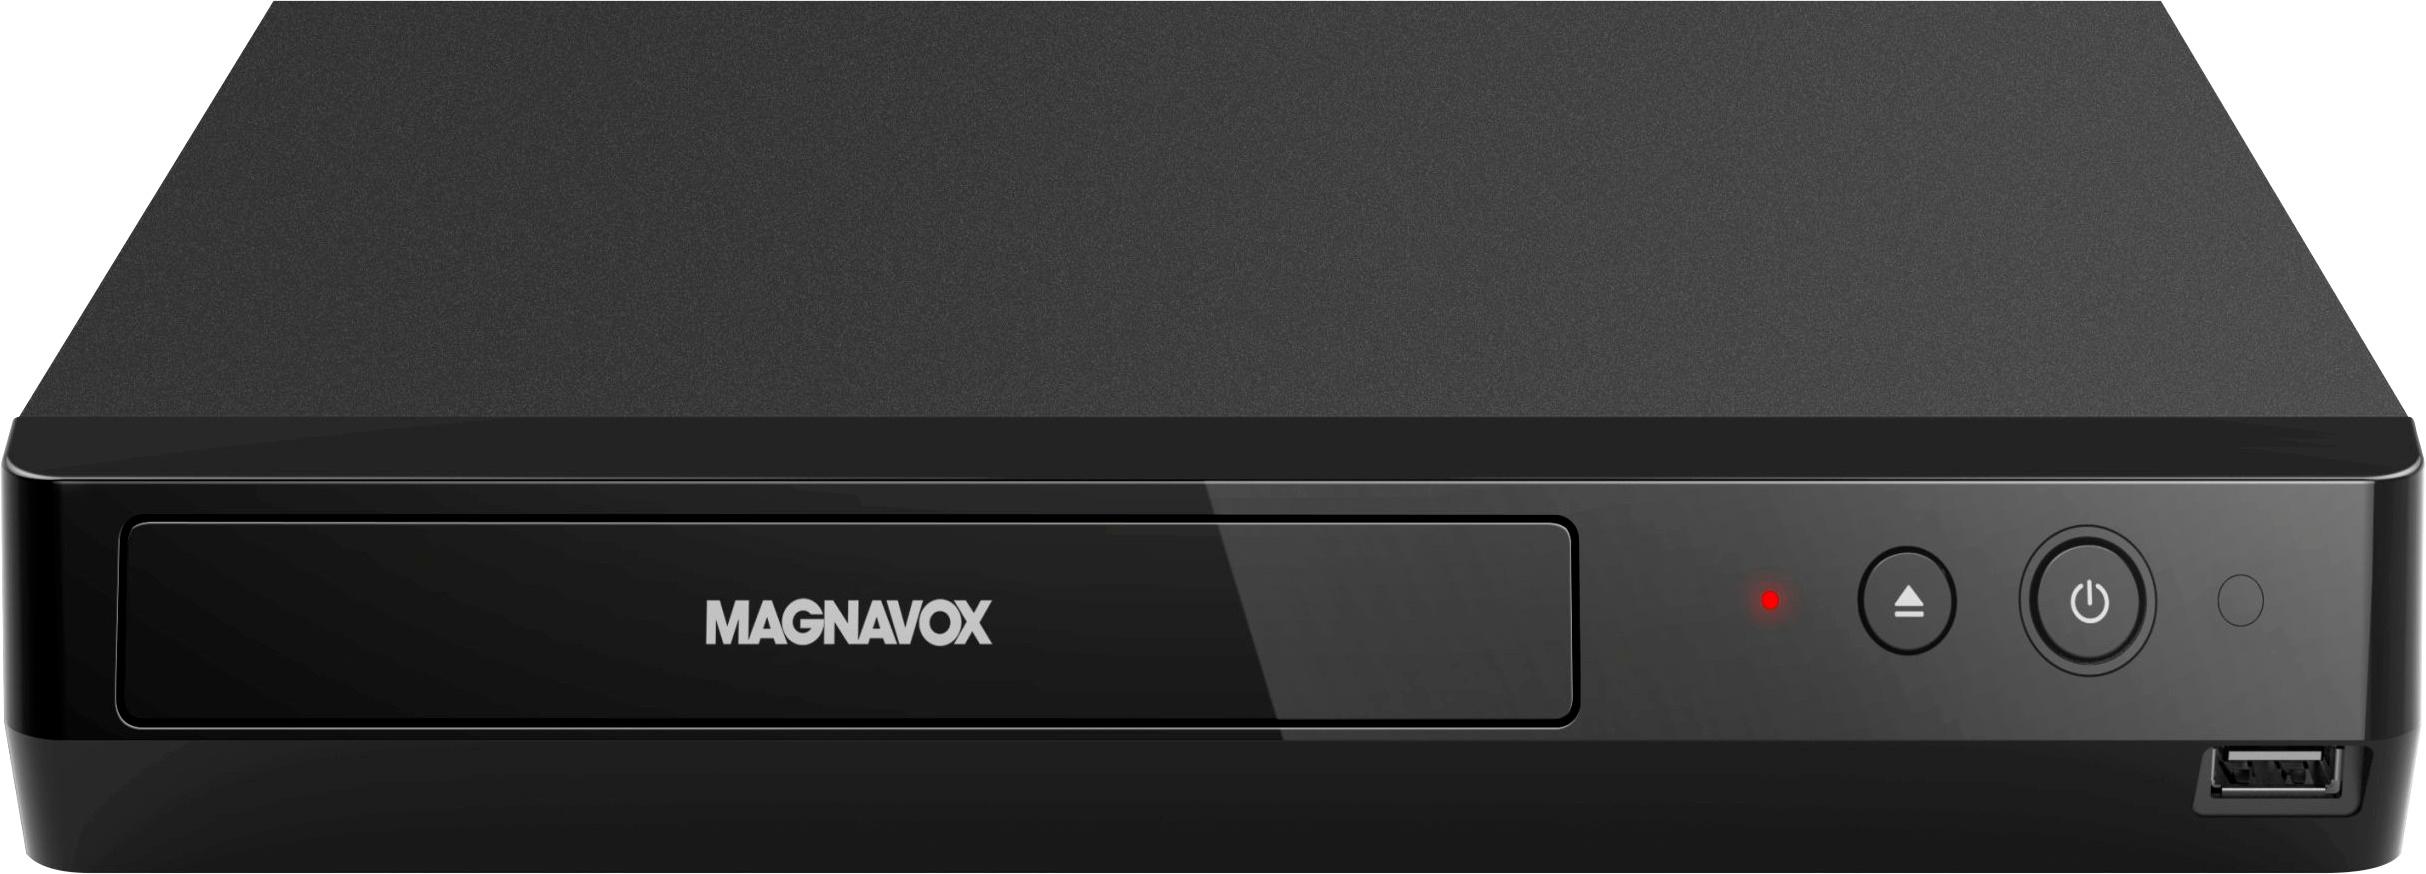 Customer Reviews Magnavox Mbp6700p 4k Ultra Hd Blu Ray Player Black Mbp6700 F7 Best Buy